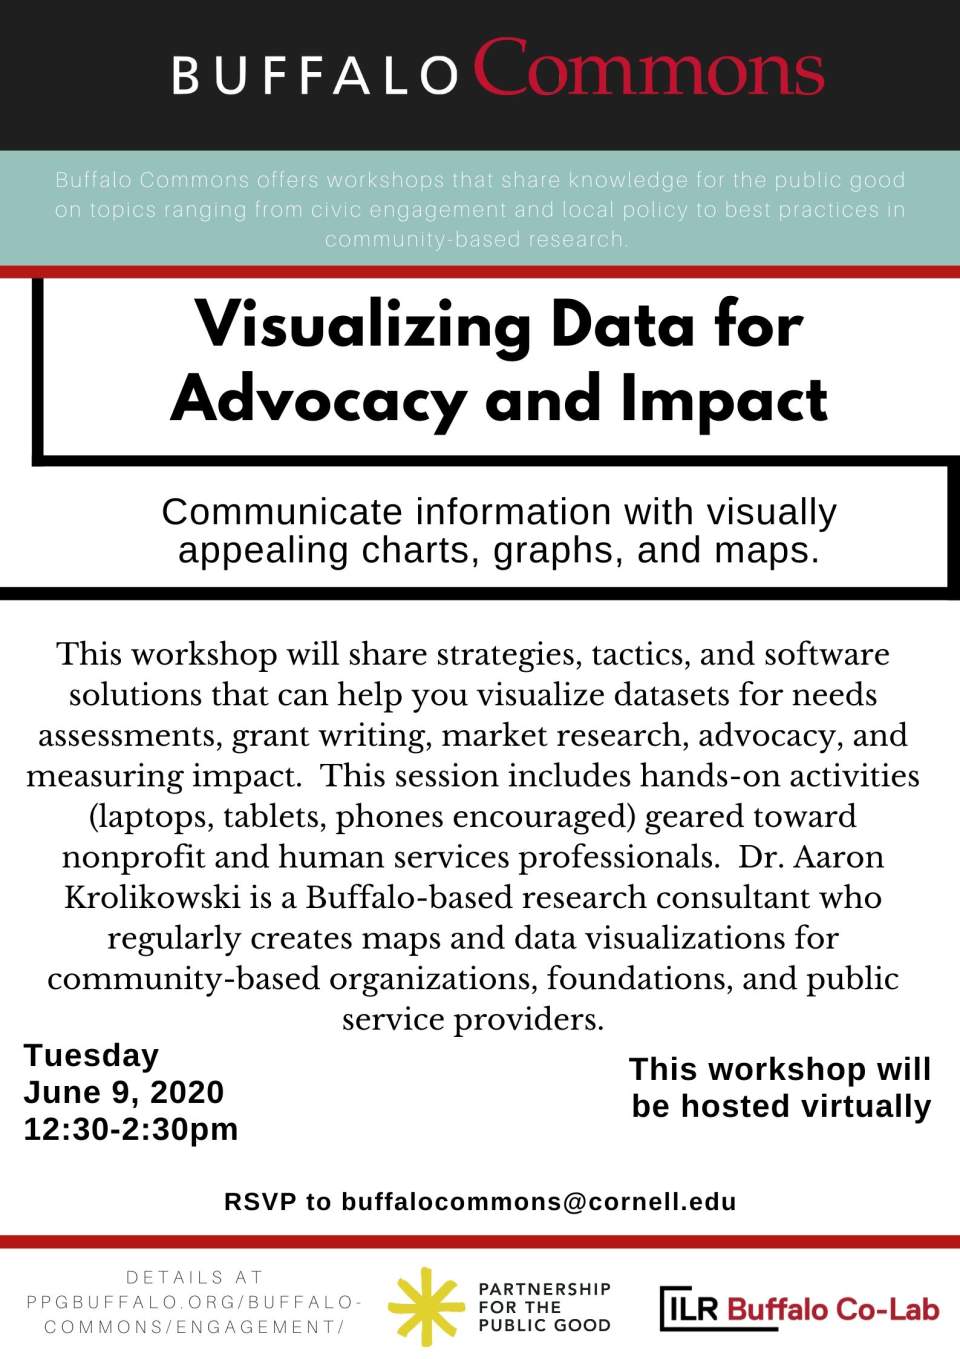 Buffalo Commons Virtual Workshop: Visualizing Data for Advocacy and Impact